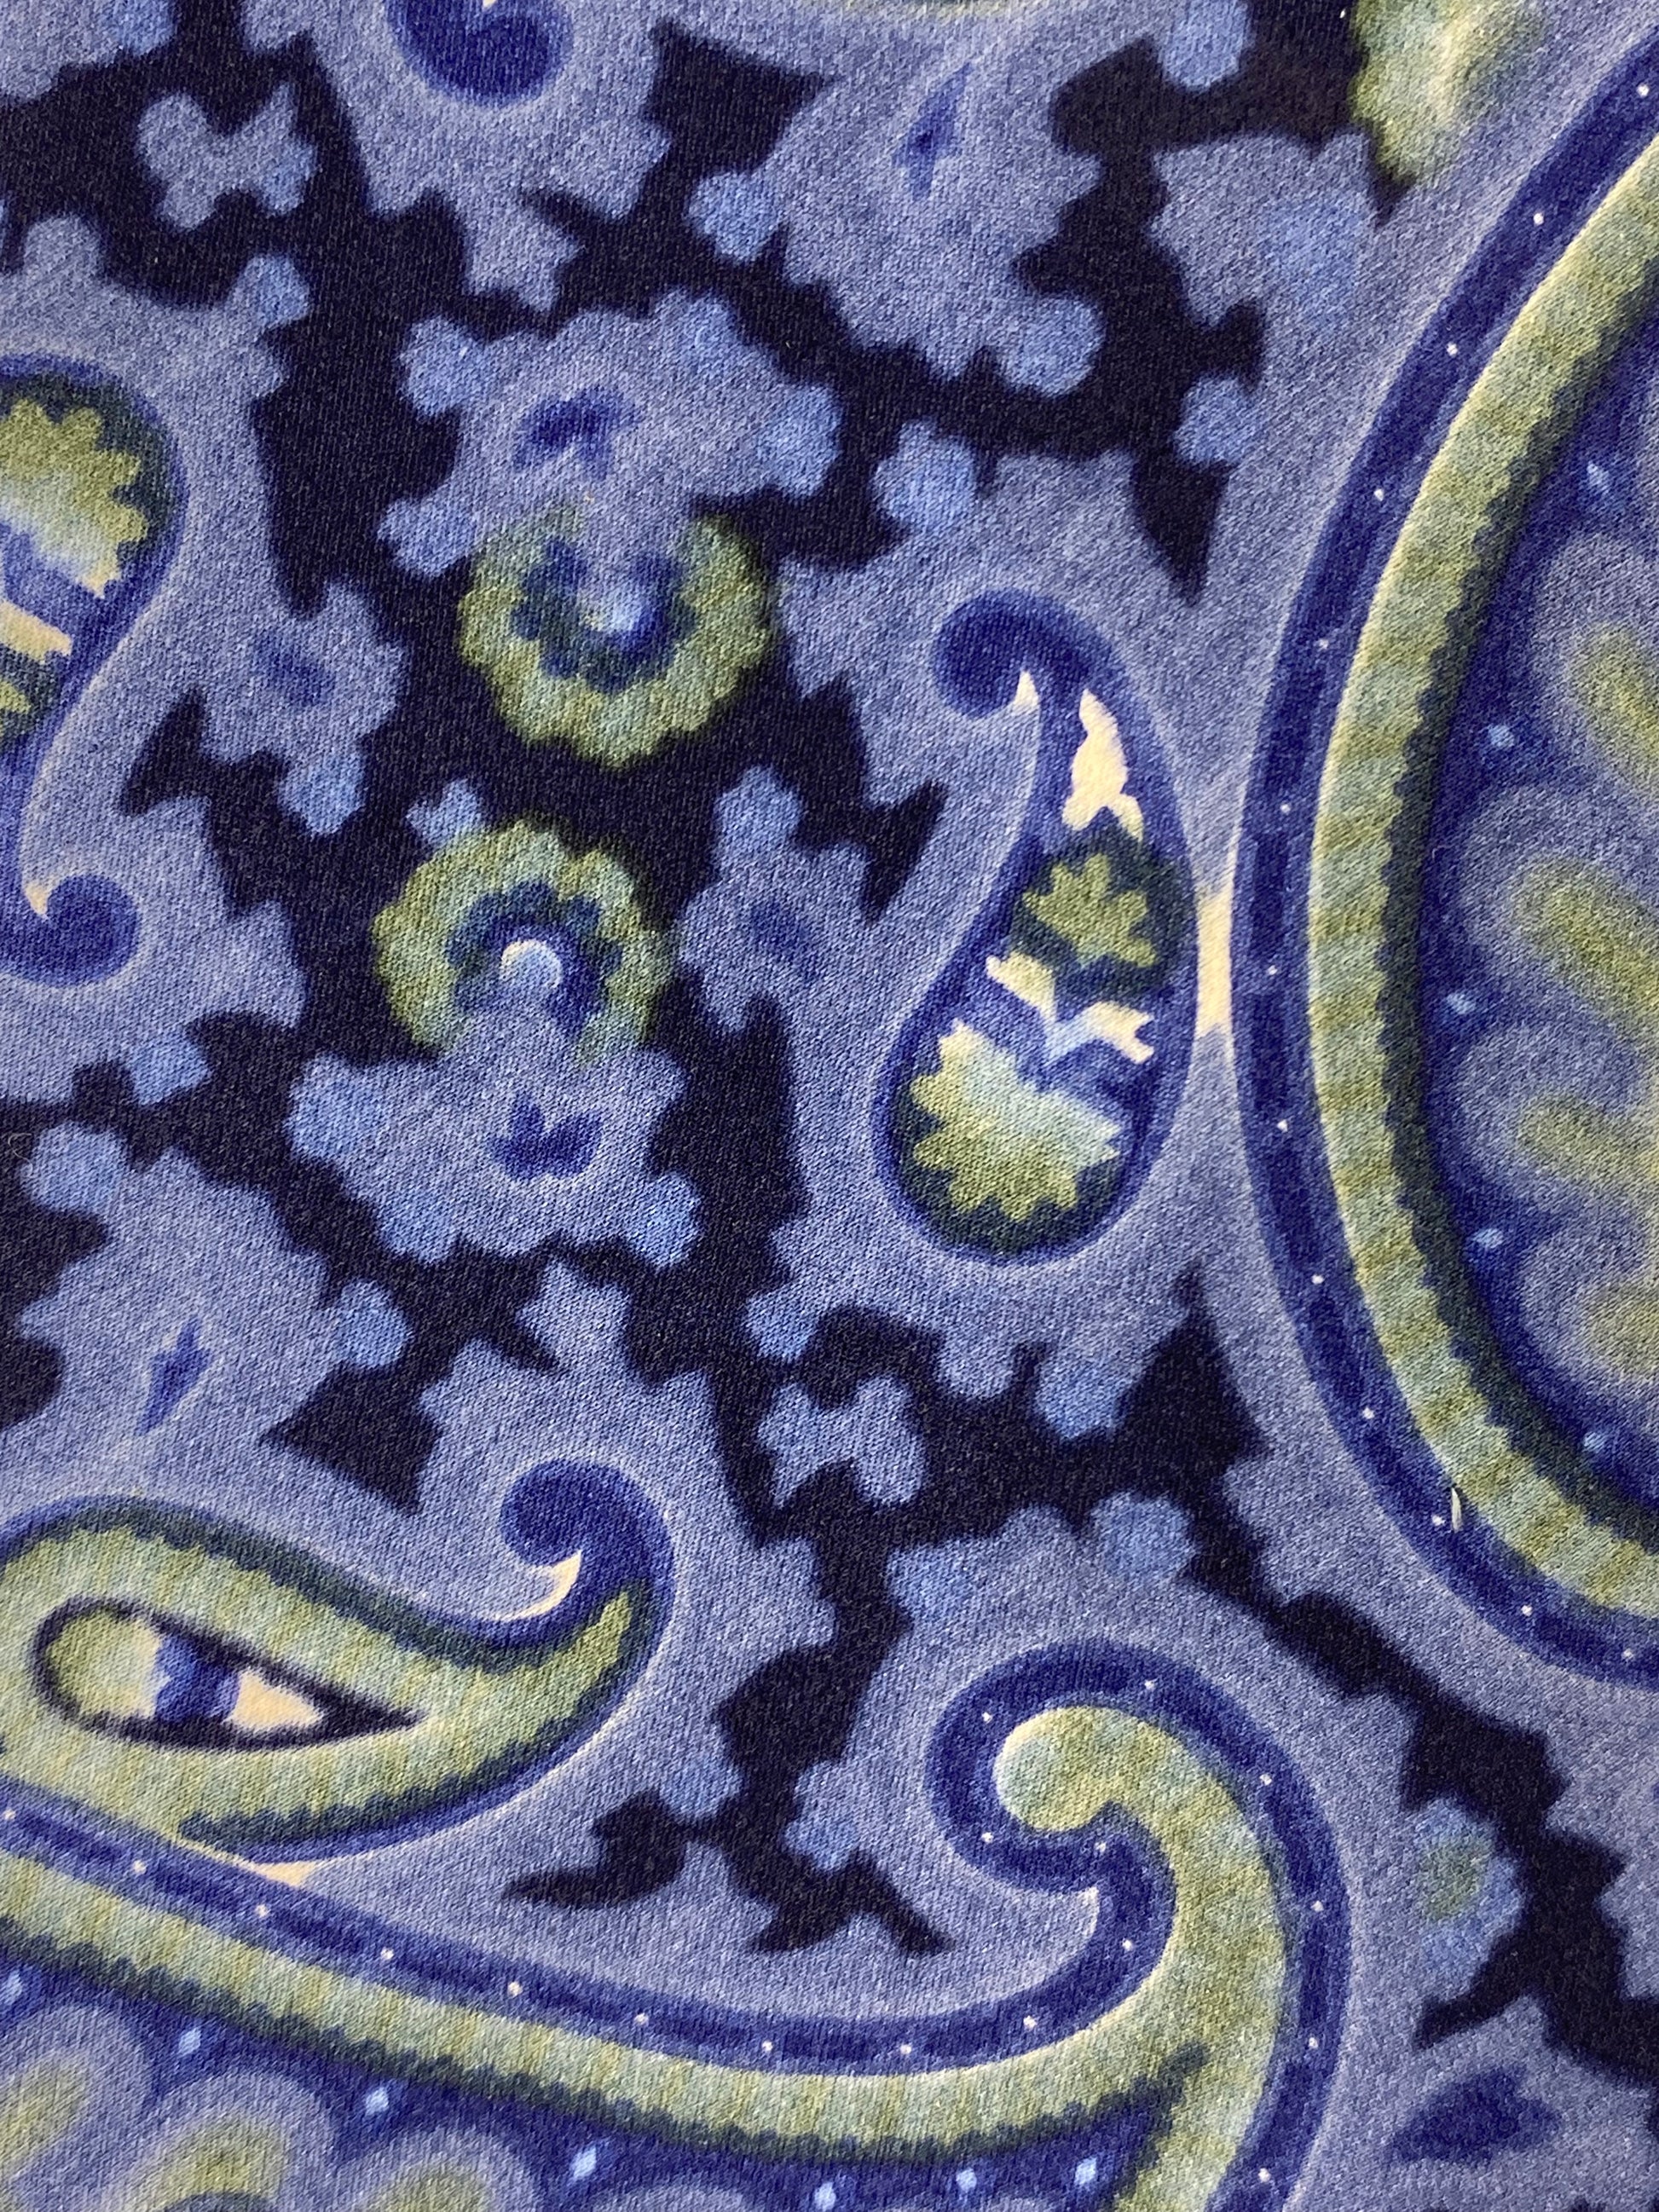 Close-up detail of: 90s Deadstock Silk Necktie, Men's Vintage Blue Green Paisley Pattern Tie, NOS